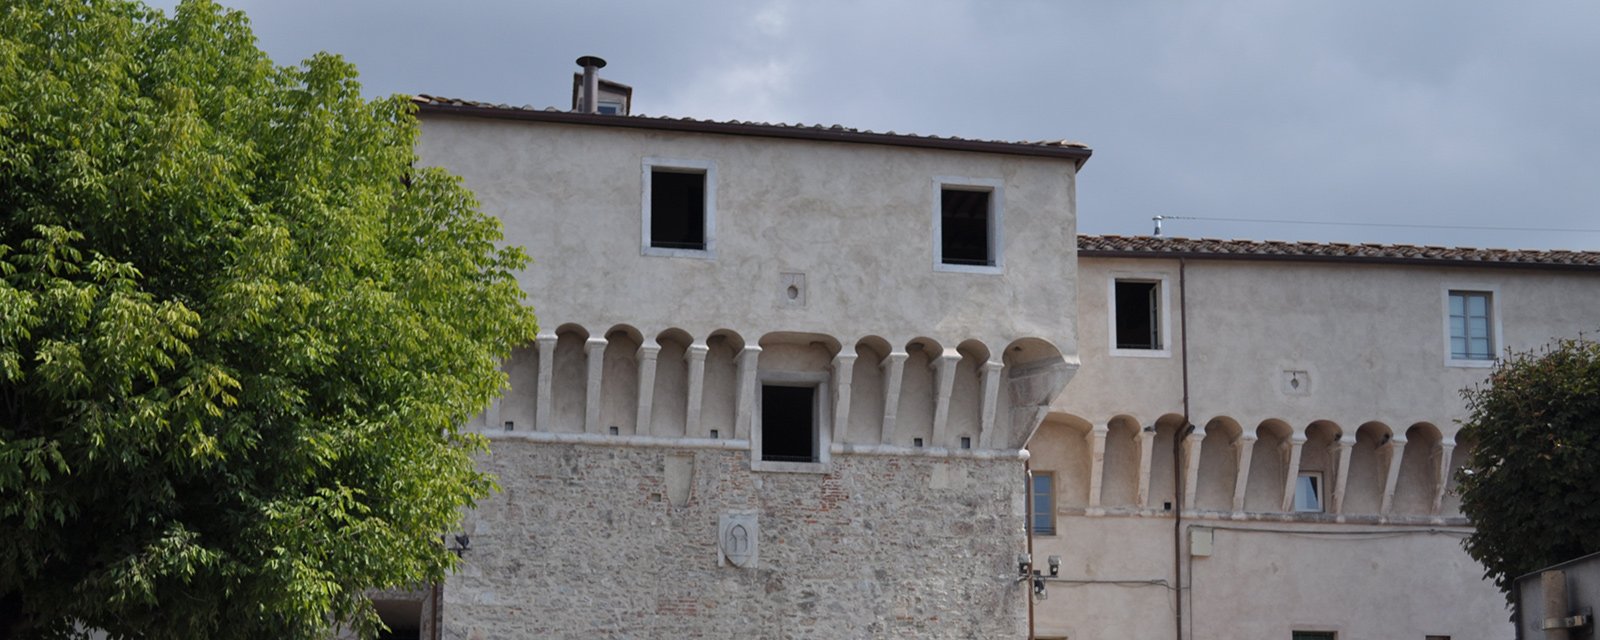 History of Pietrasanta and Camaiore